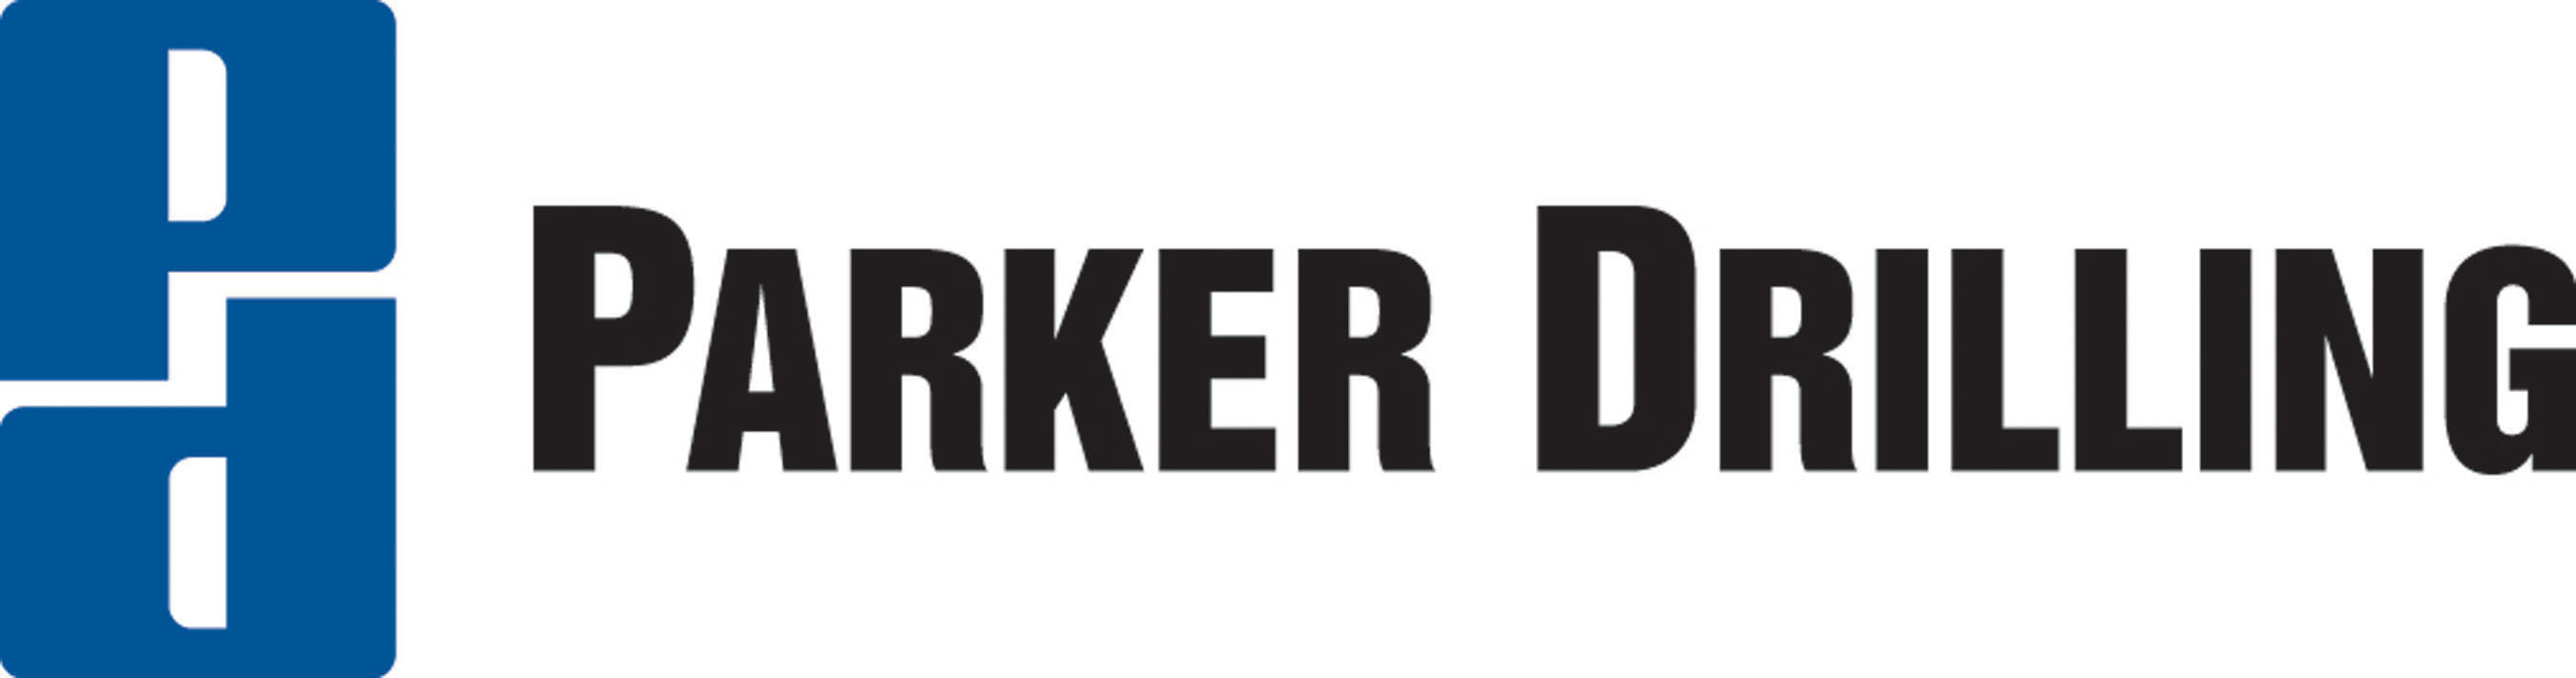 Parker Drilling Co. Logo. (PRNewsFoto/Parker Drilling Co.) (PRNewsFoto/)